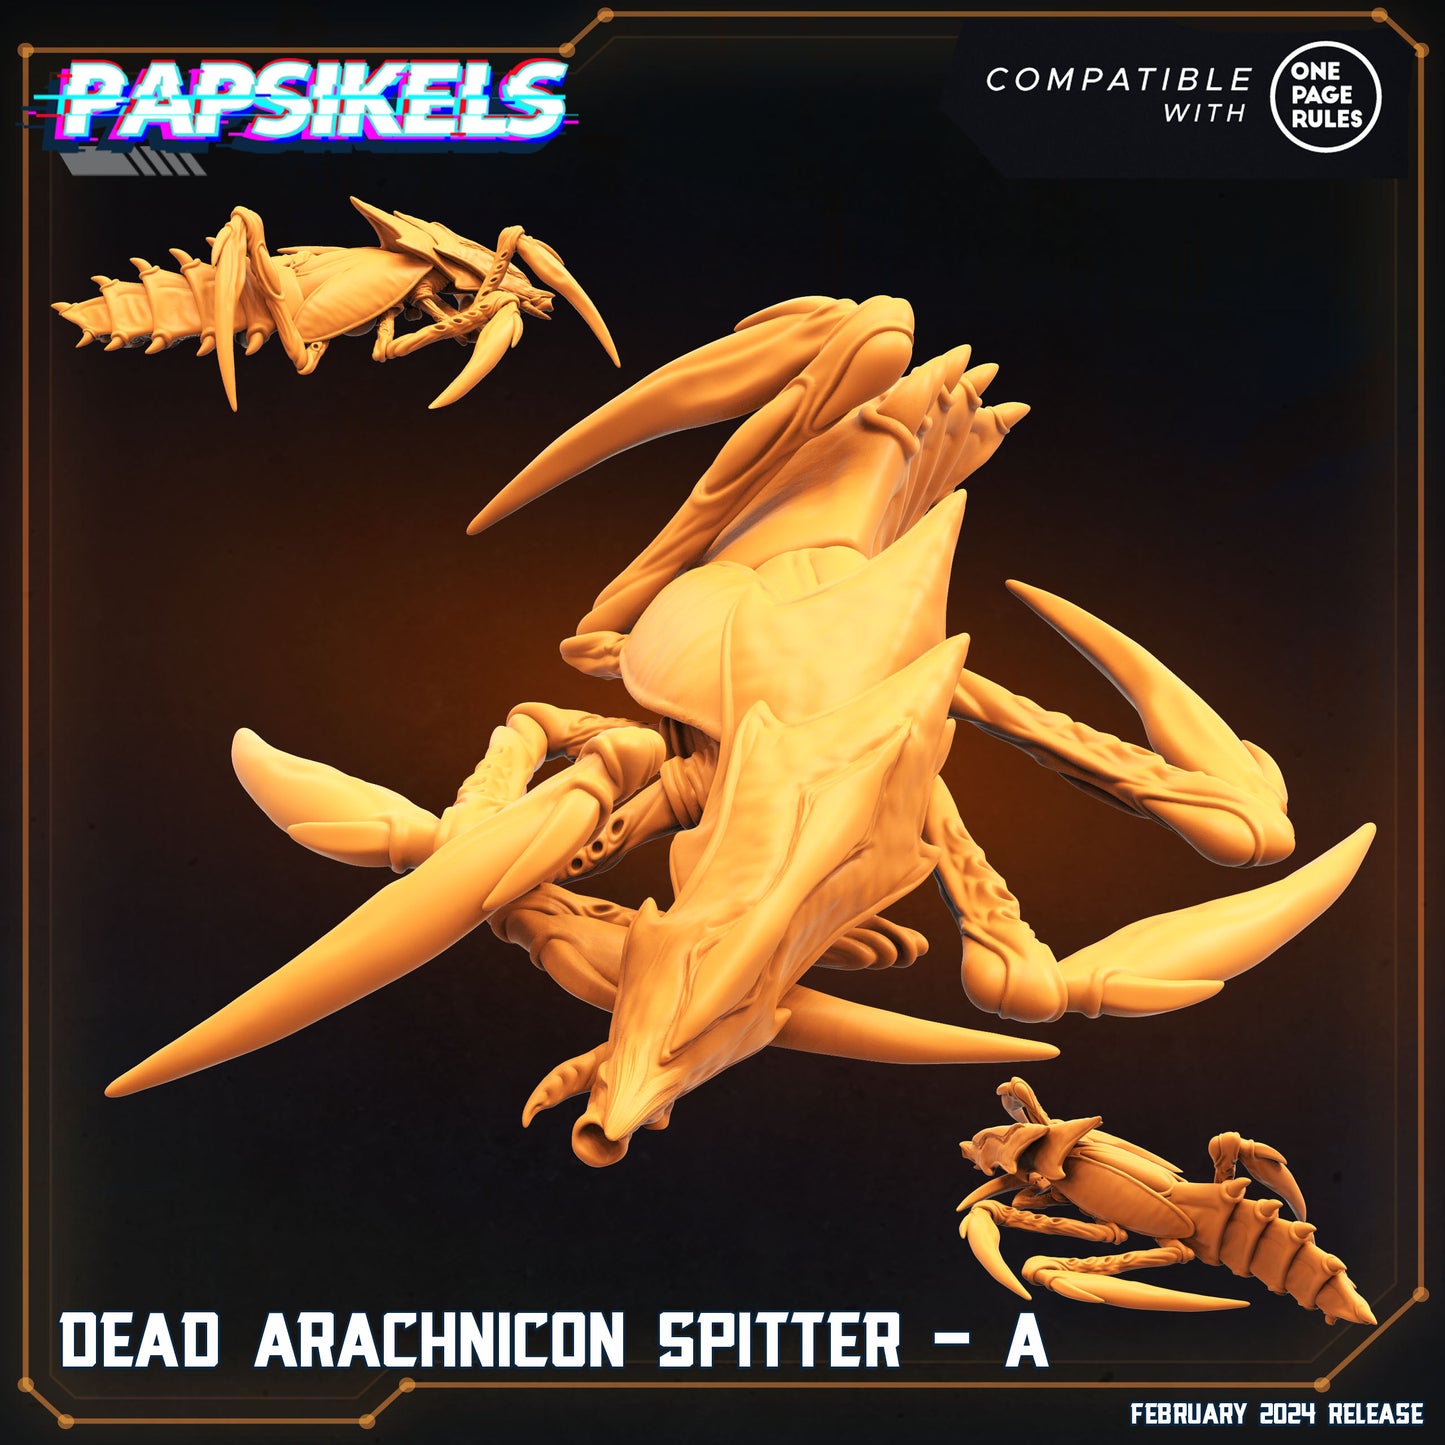 Dead Arachnicon Spitter